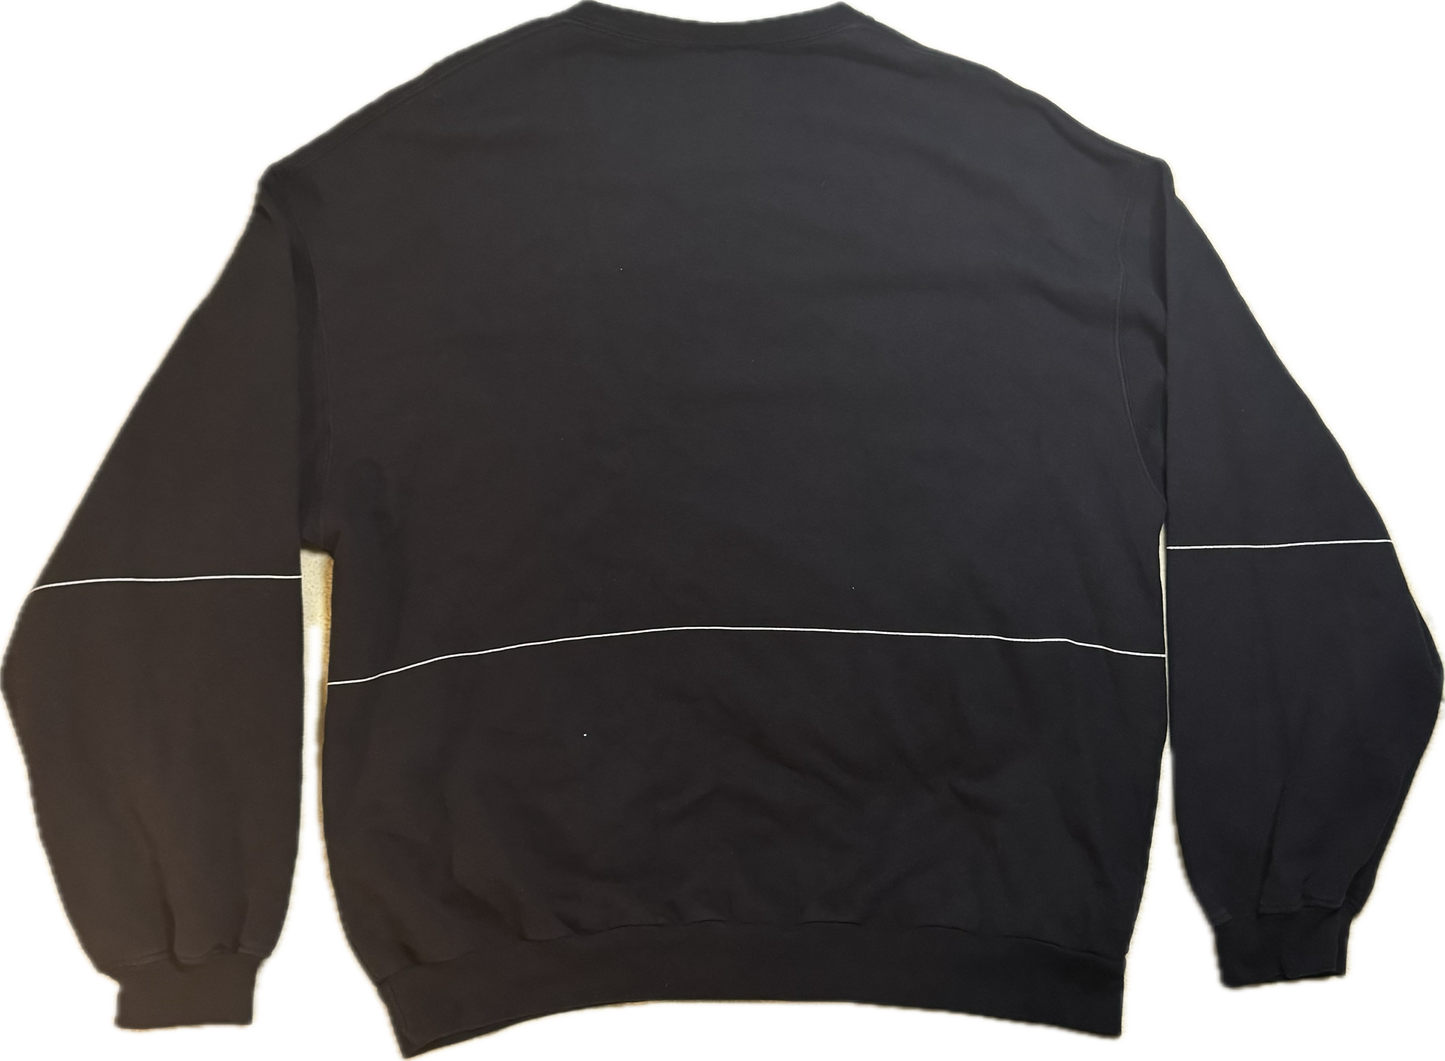 Balenciaga Fall 2017 Homme Embroidered Crewneck Sweatshirt